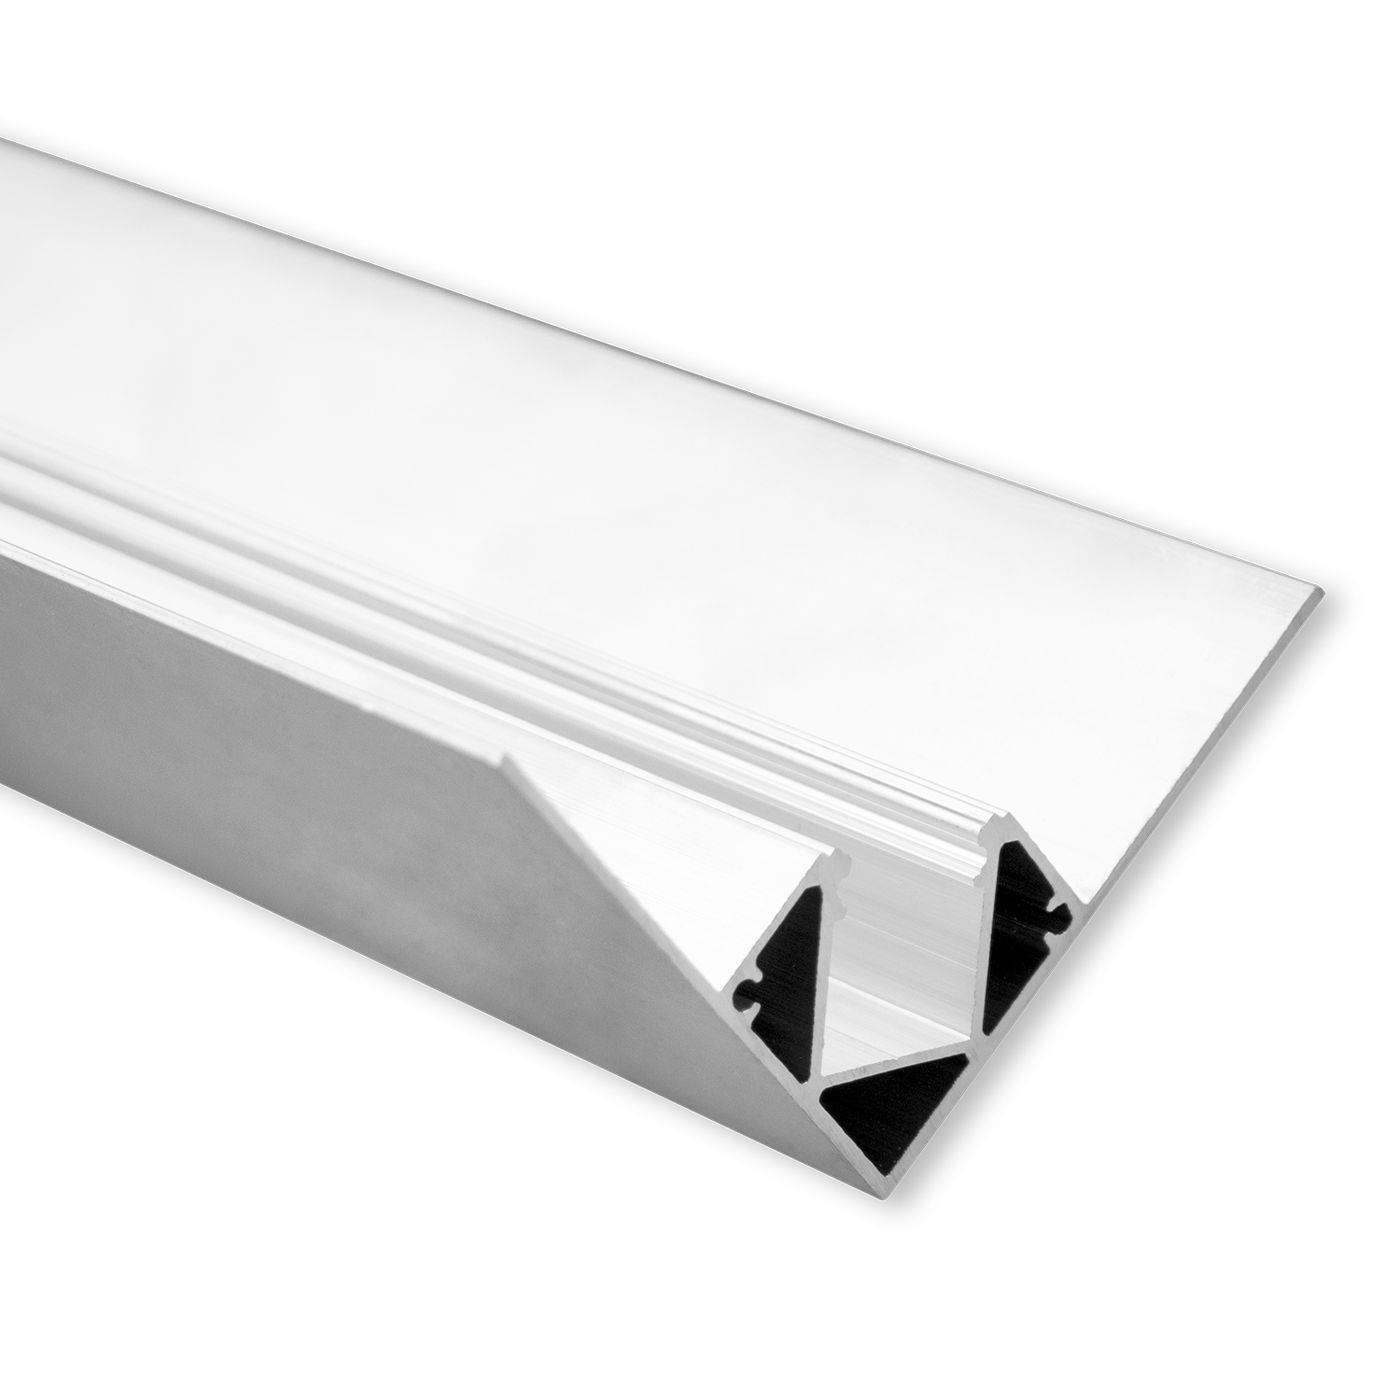 2m LED Profil TBP6 Silber 43,7x43,7mm Aluminium Trockenbauprofil für 14mm LED Streifen